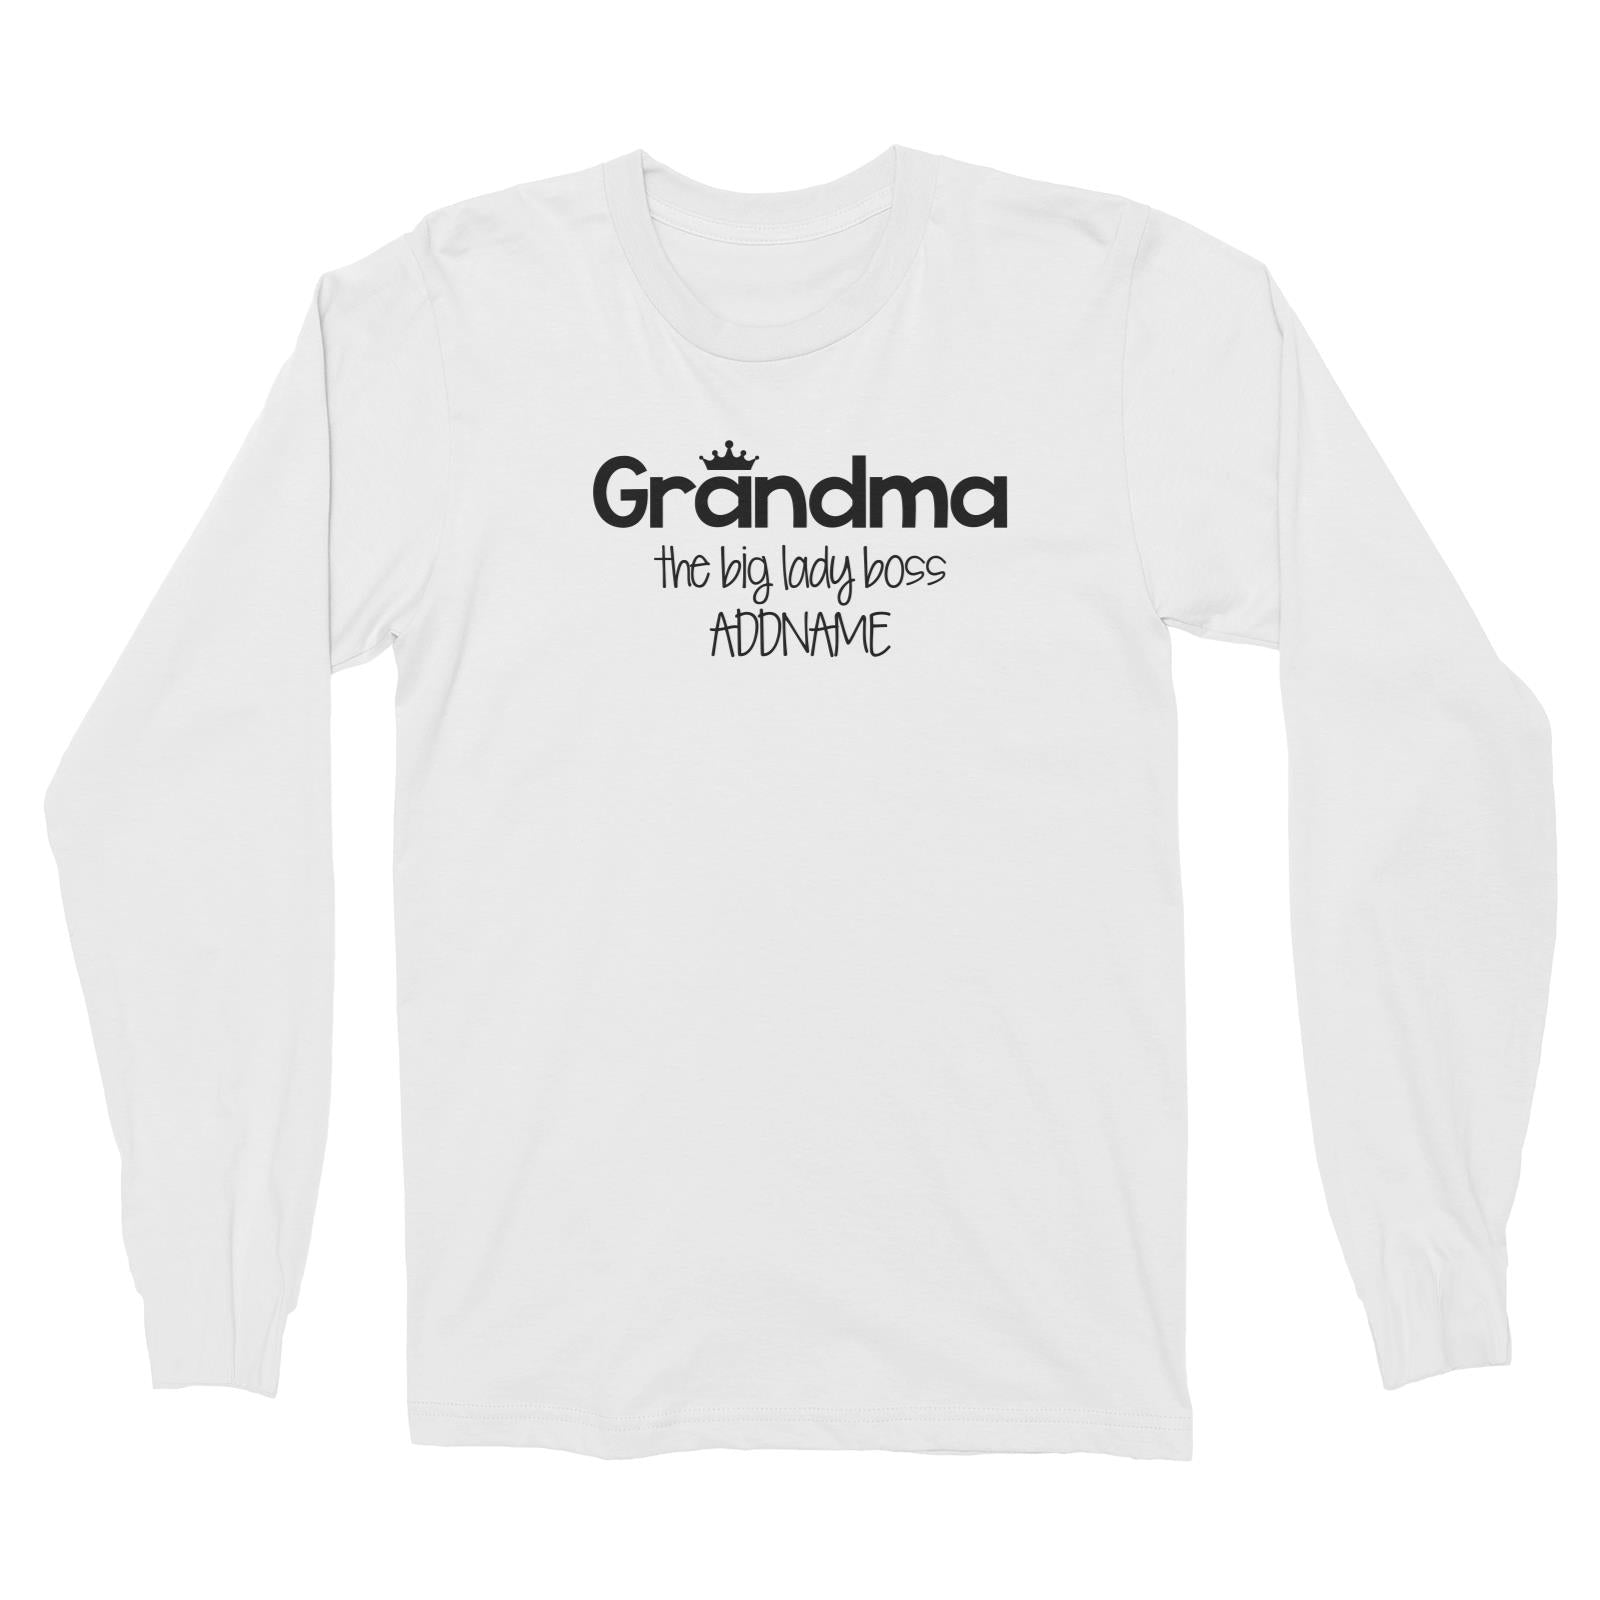 Grandma with Tiara The Big Lady Boss Long Sleeve Unisex T-Shirt